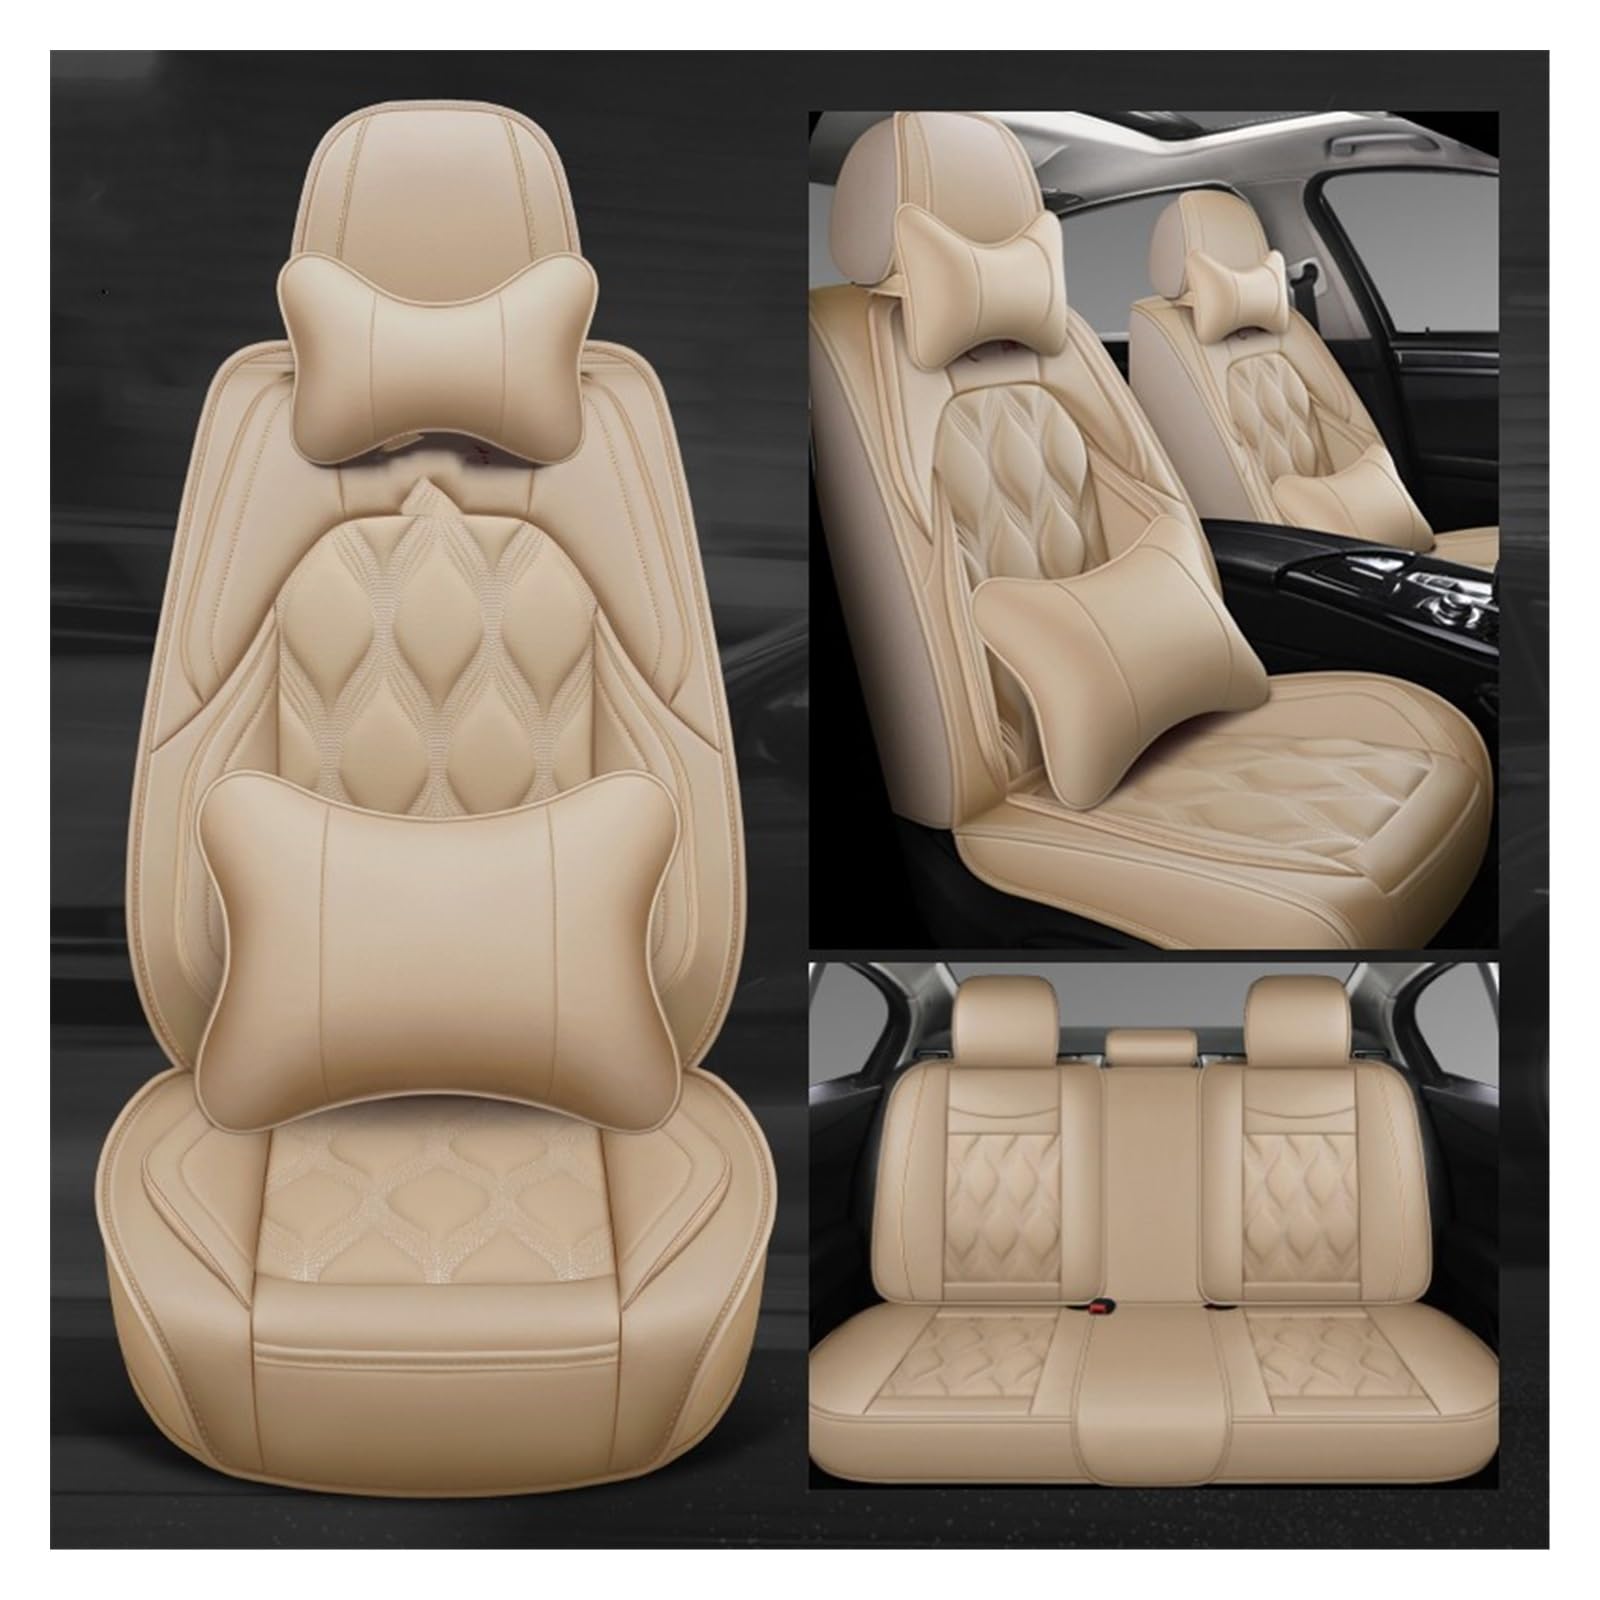 RBHAI Sitzbezug Werkstatt Auto Autositzbezüge Für Alle Modelle C4-Aircross C4-PICASSO C5 C2 C6 C4 C-Elysee C-Triomphe Auto(B,Luxury) von RBHAI